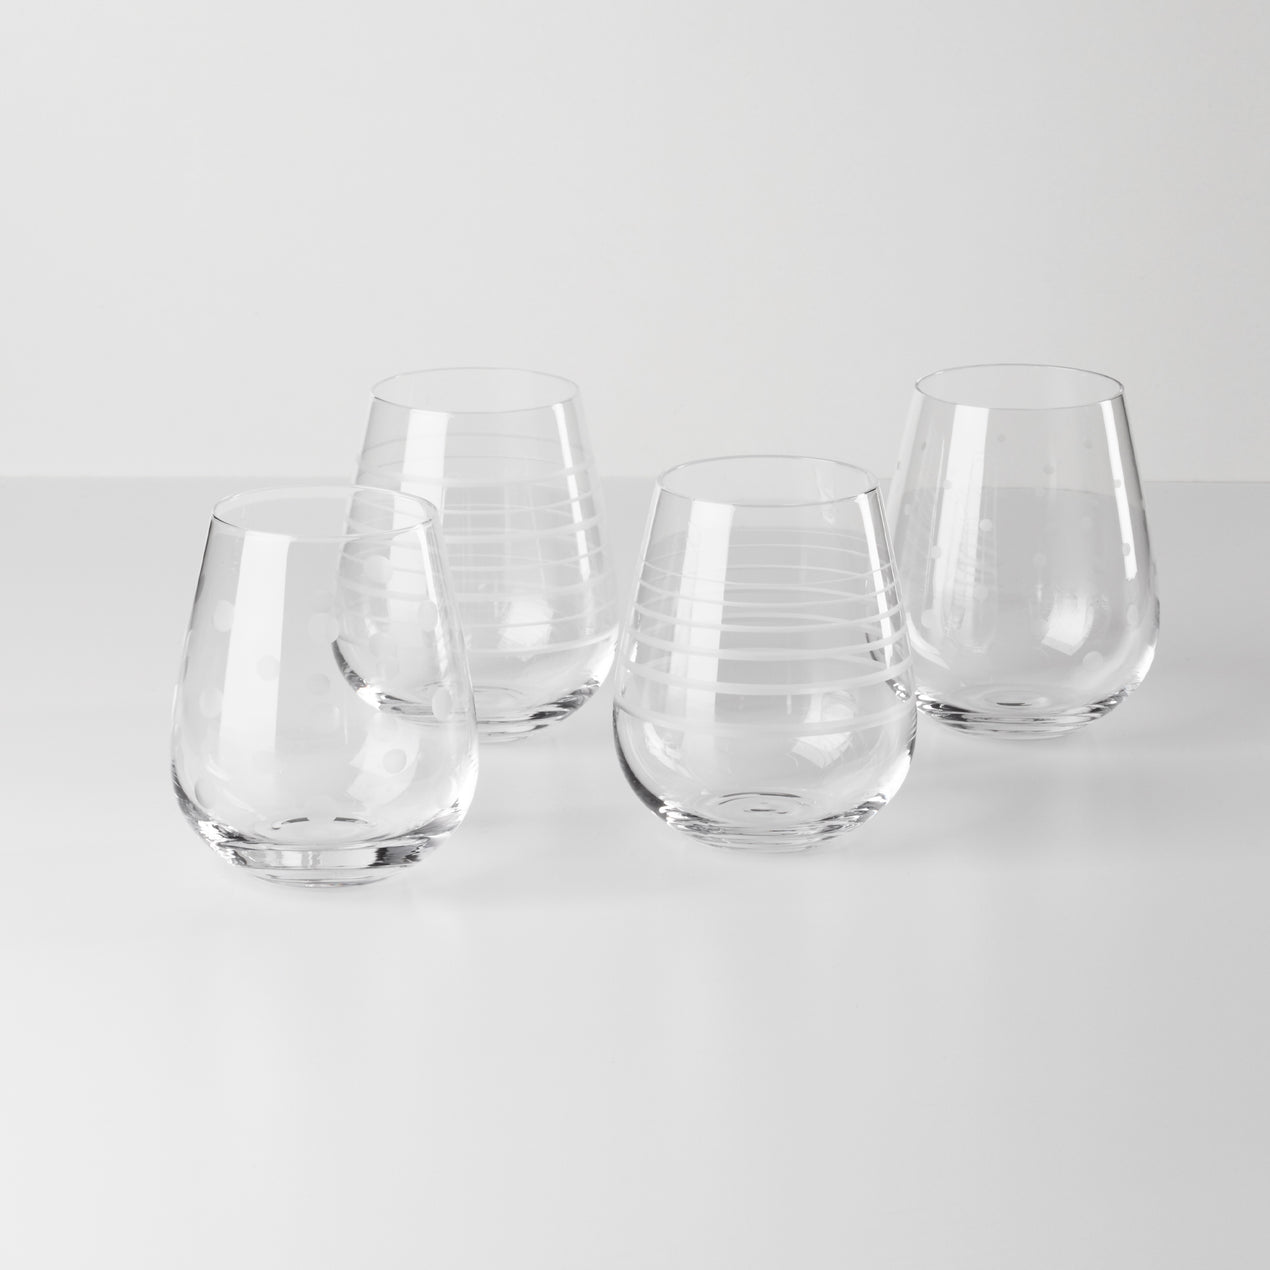 Vanleonet Stemless Wine Glasses Set of 4, 12oz Diamond Shaped Wine Glass,  Unique Short Tumblers, Coc…See more Vanleonet Stemless Wine Glasses Set of